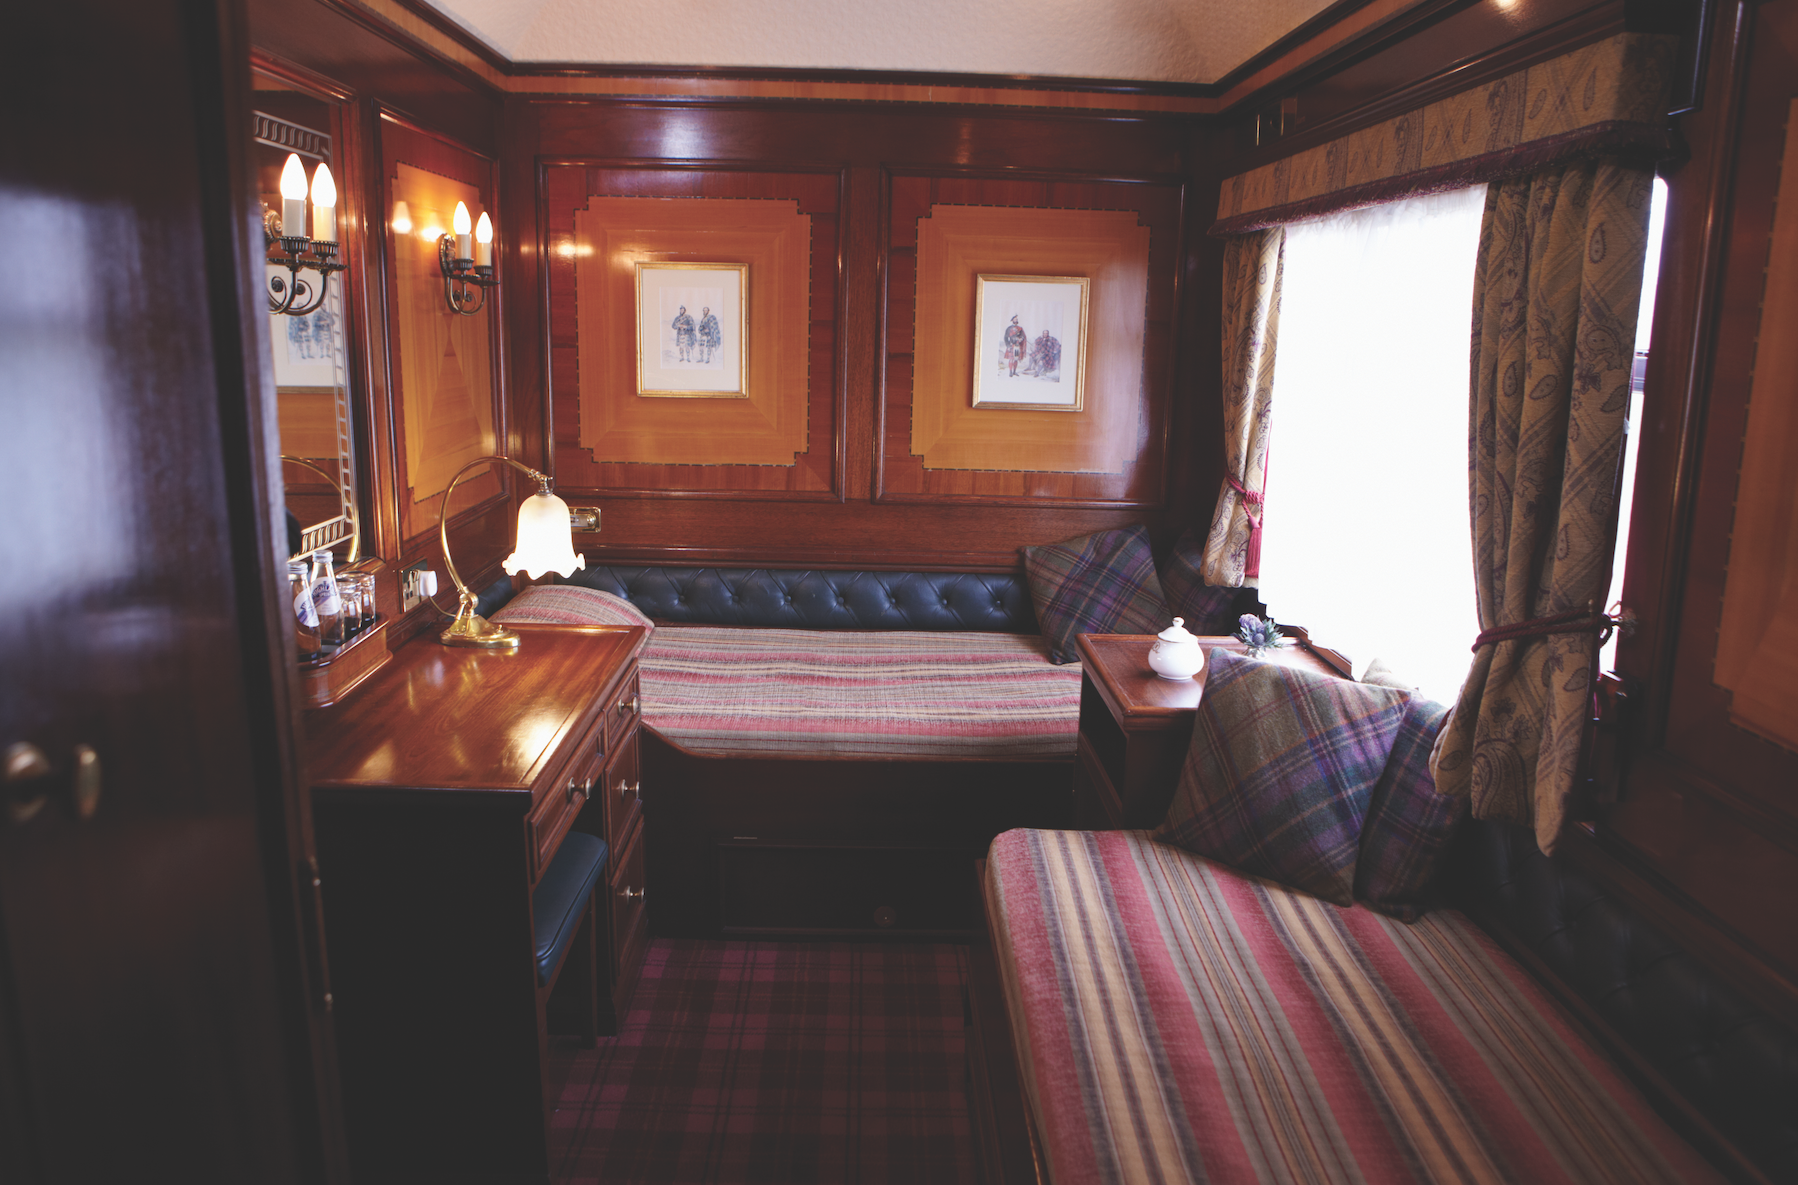   Bedroom onboard the Belmond Royal Scotsman (photo credit: Belmond)  